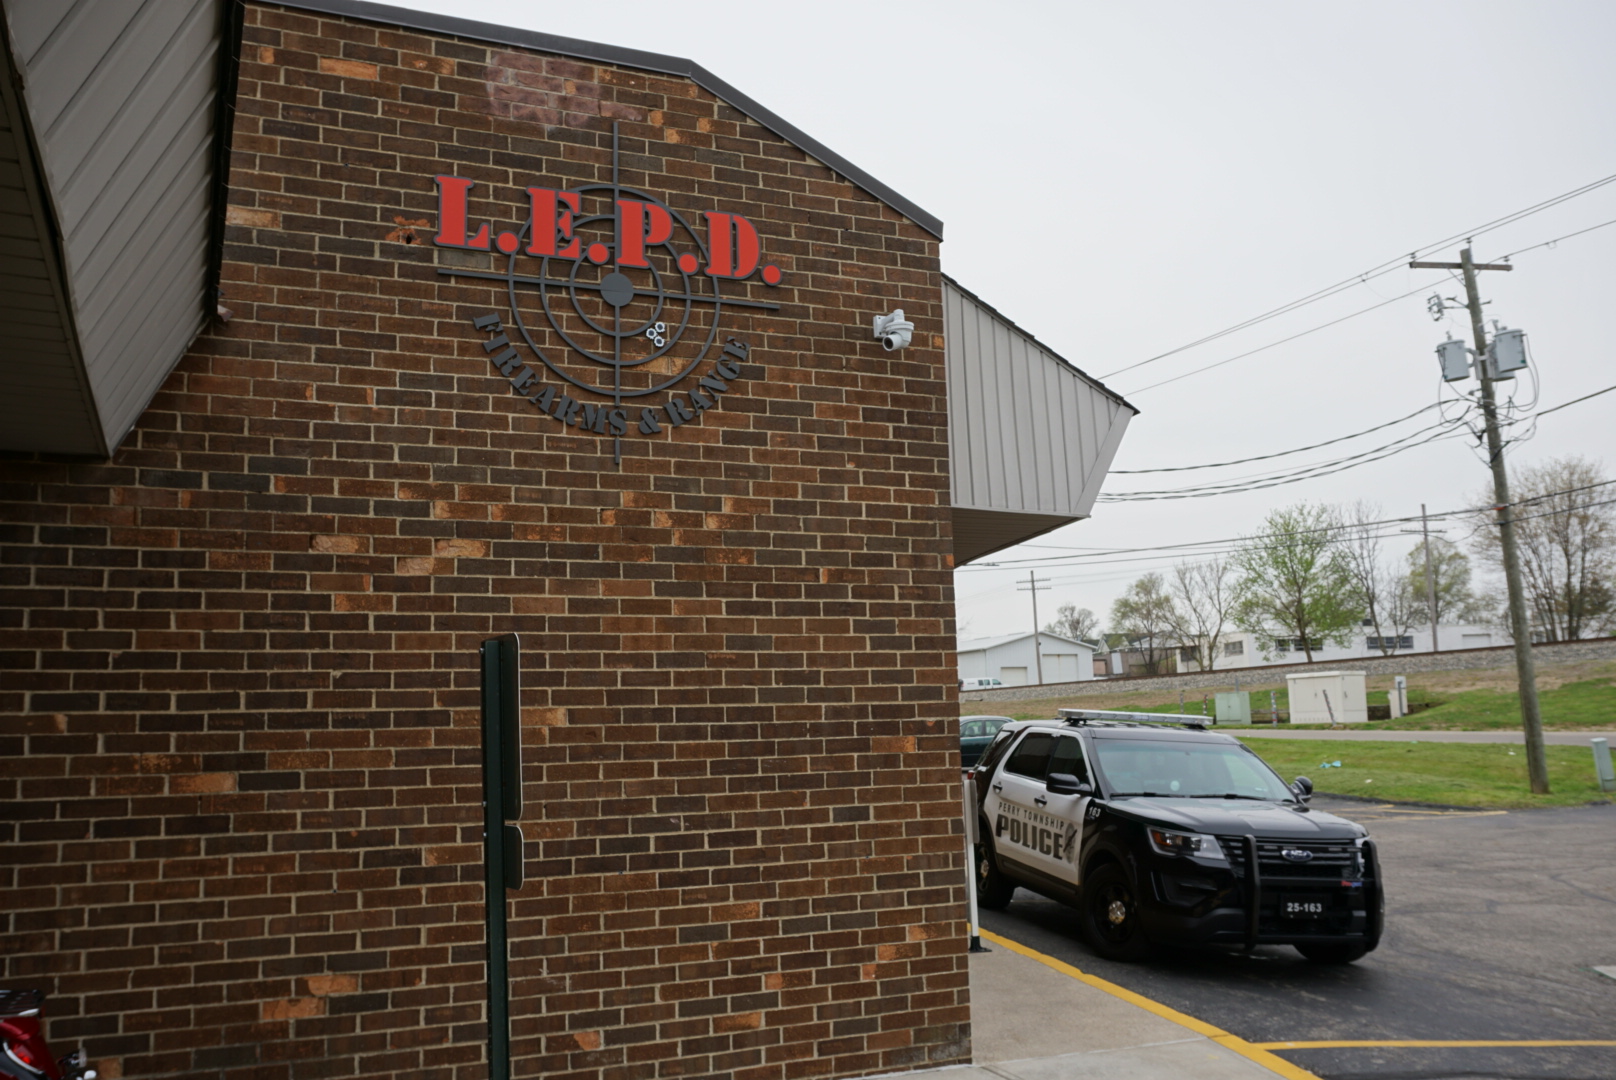 L.E.P.D. Firearms, Range & Training Facility